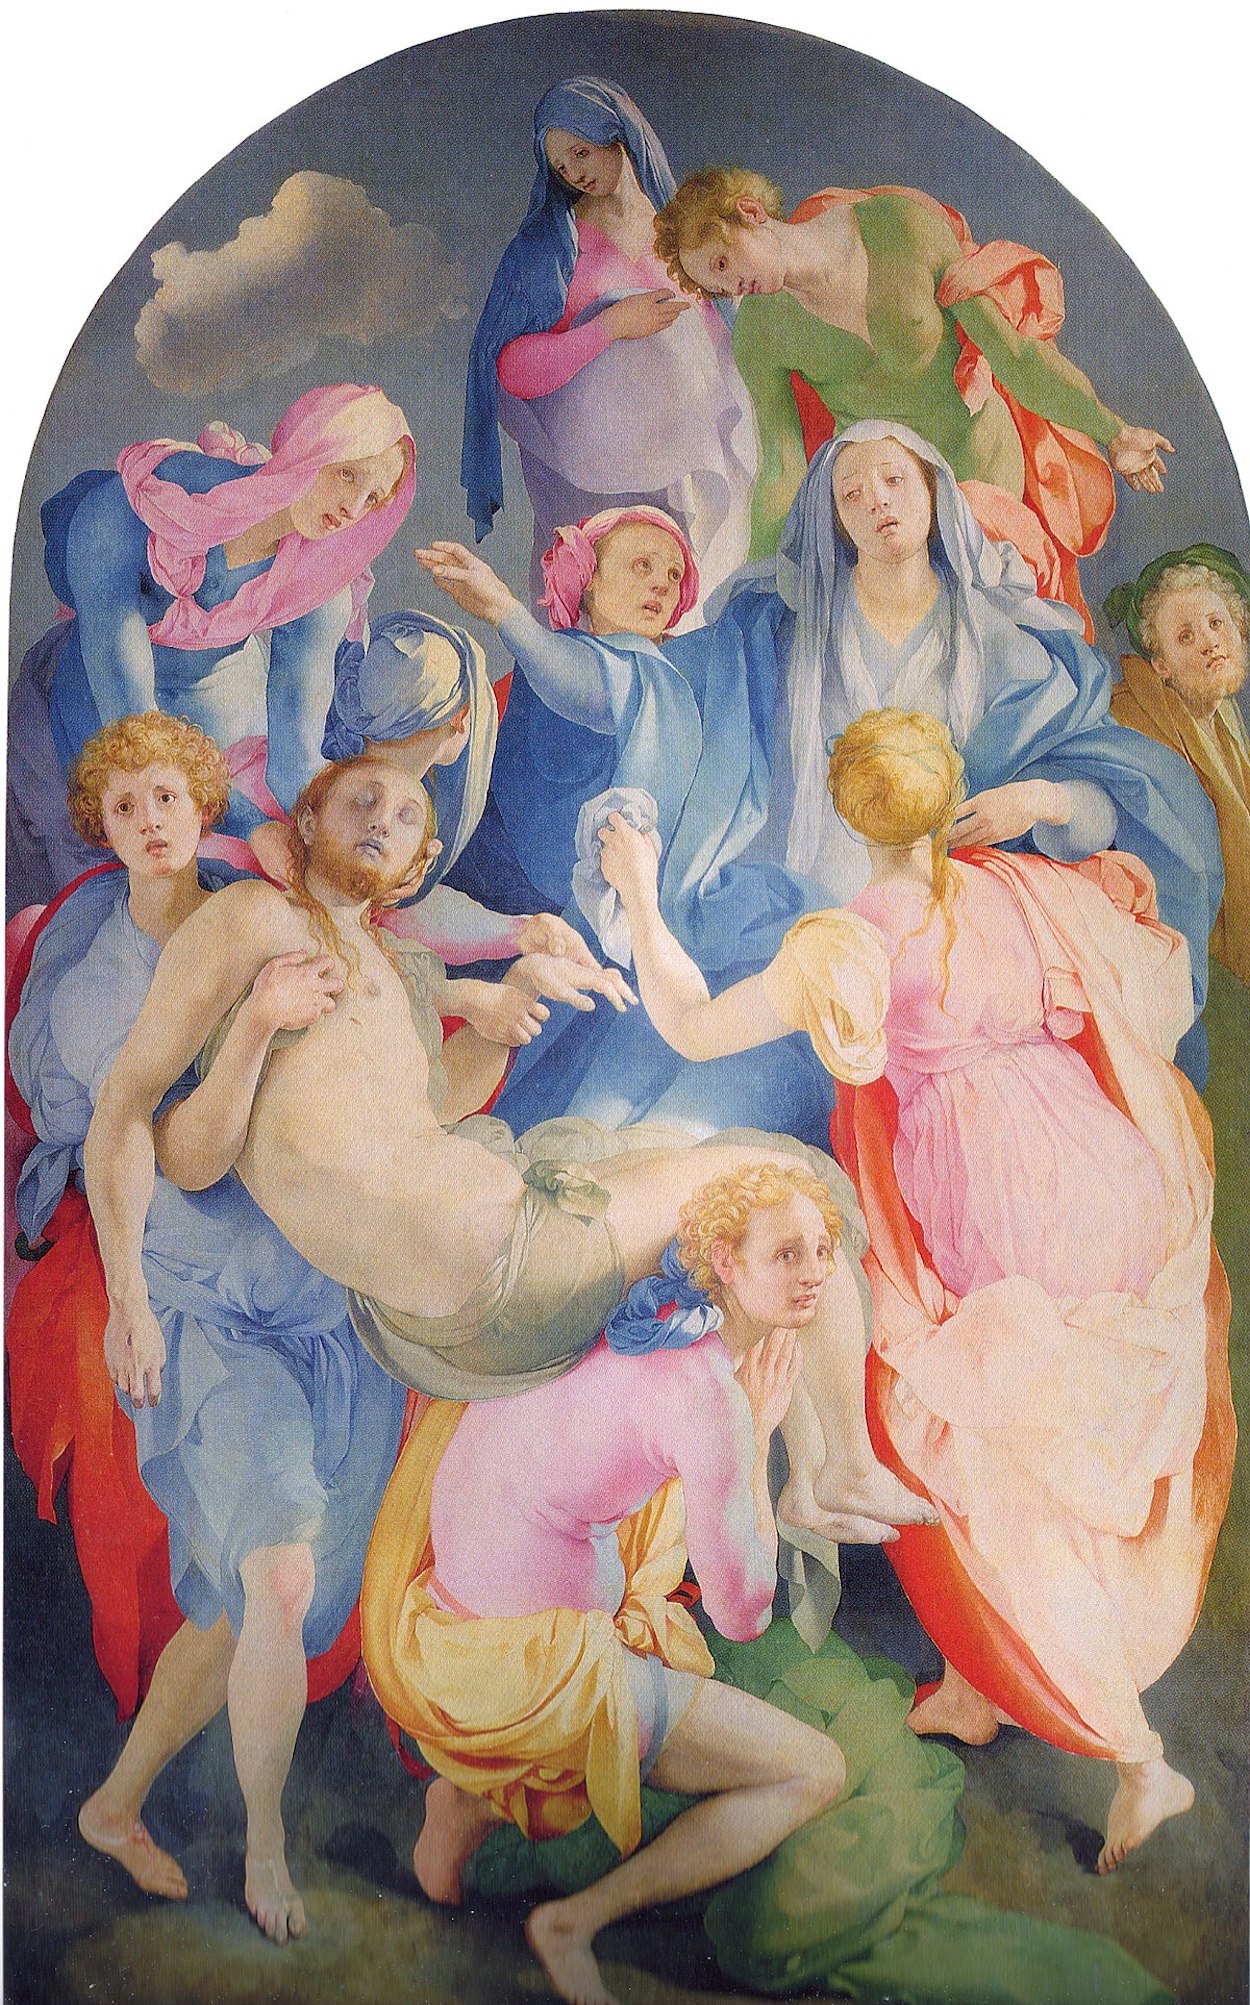 Çarmıktan İndirme by Jacopo da Pontormo - 1528 